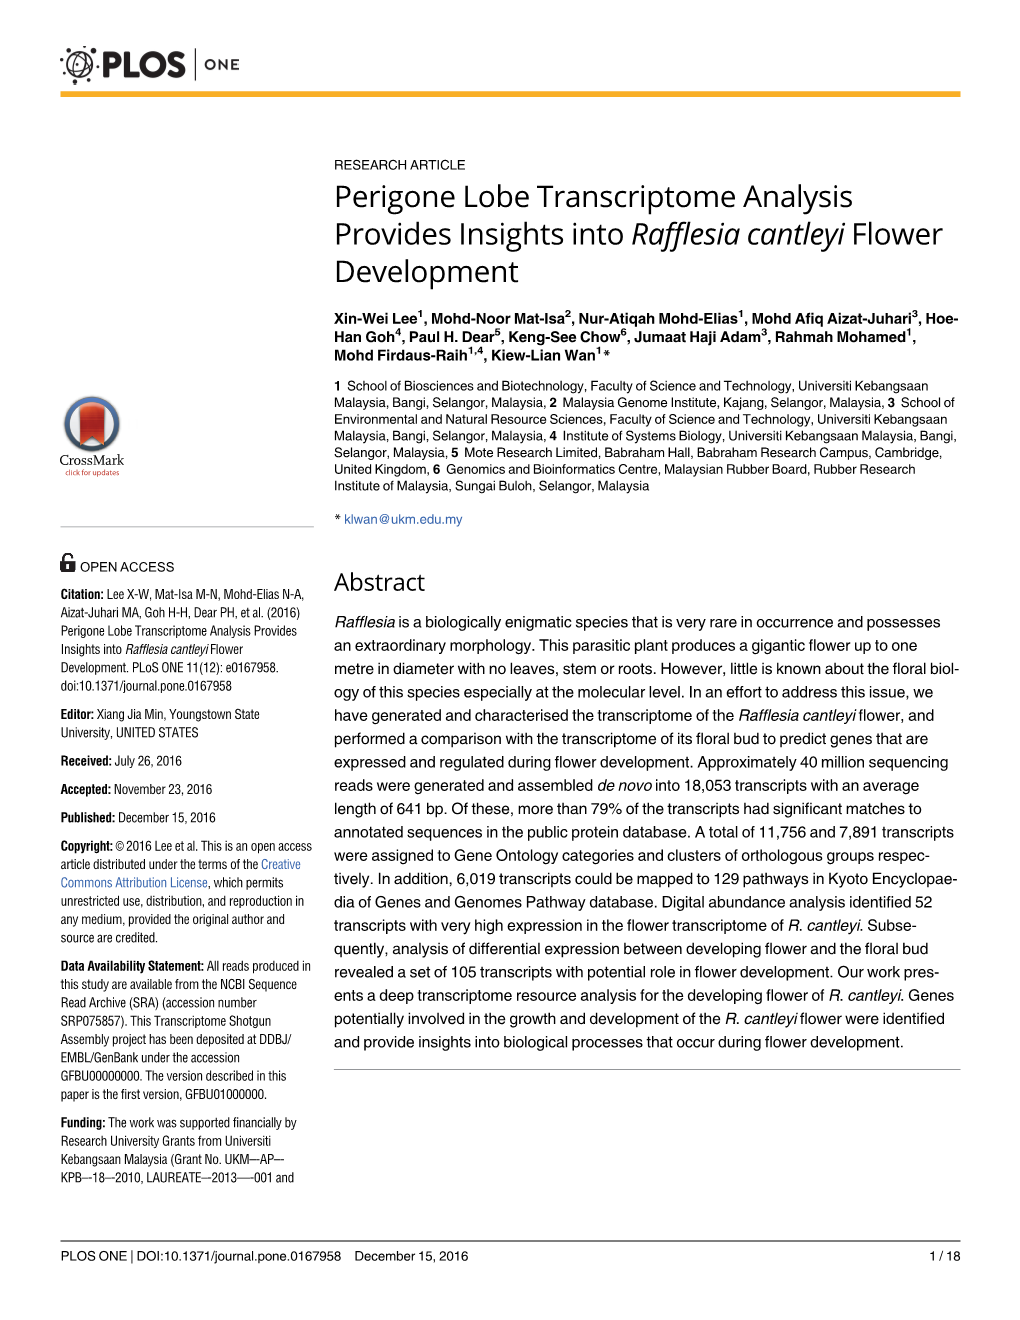 Perigone Lobe Transcriptome Analysis Provides Insights Into Rafflesia Cantleyi Flower Development